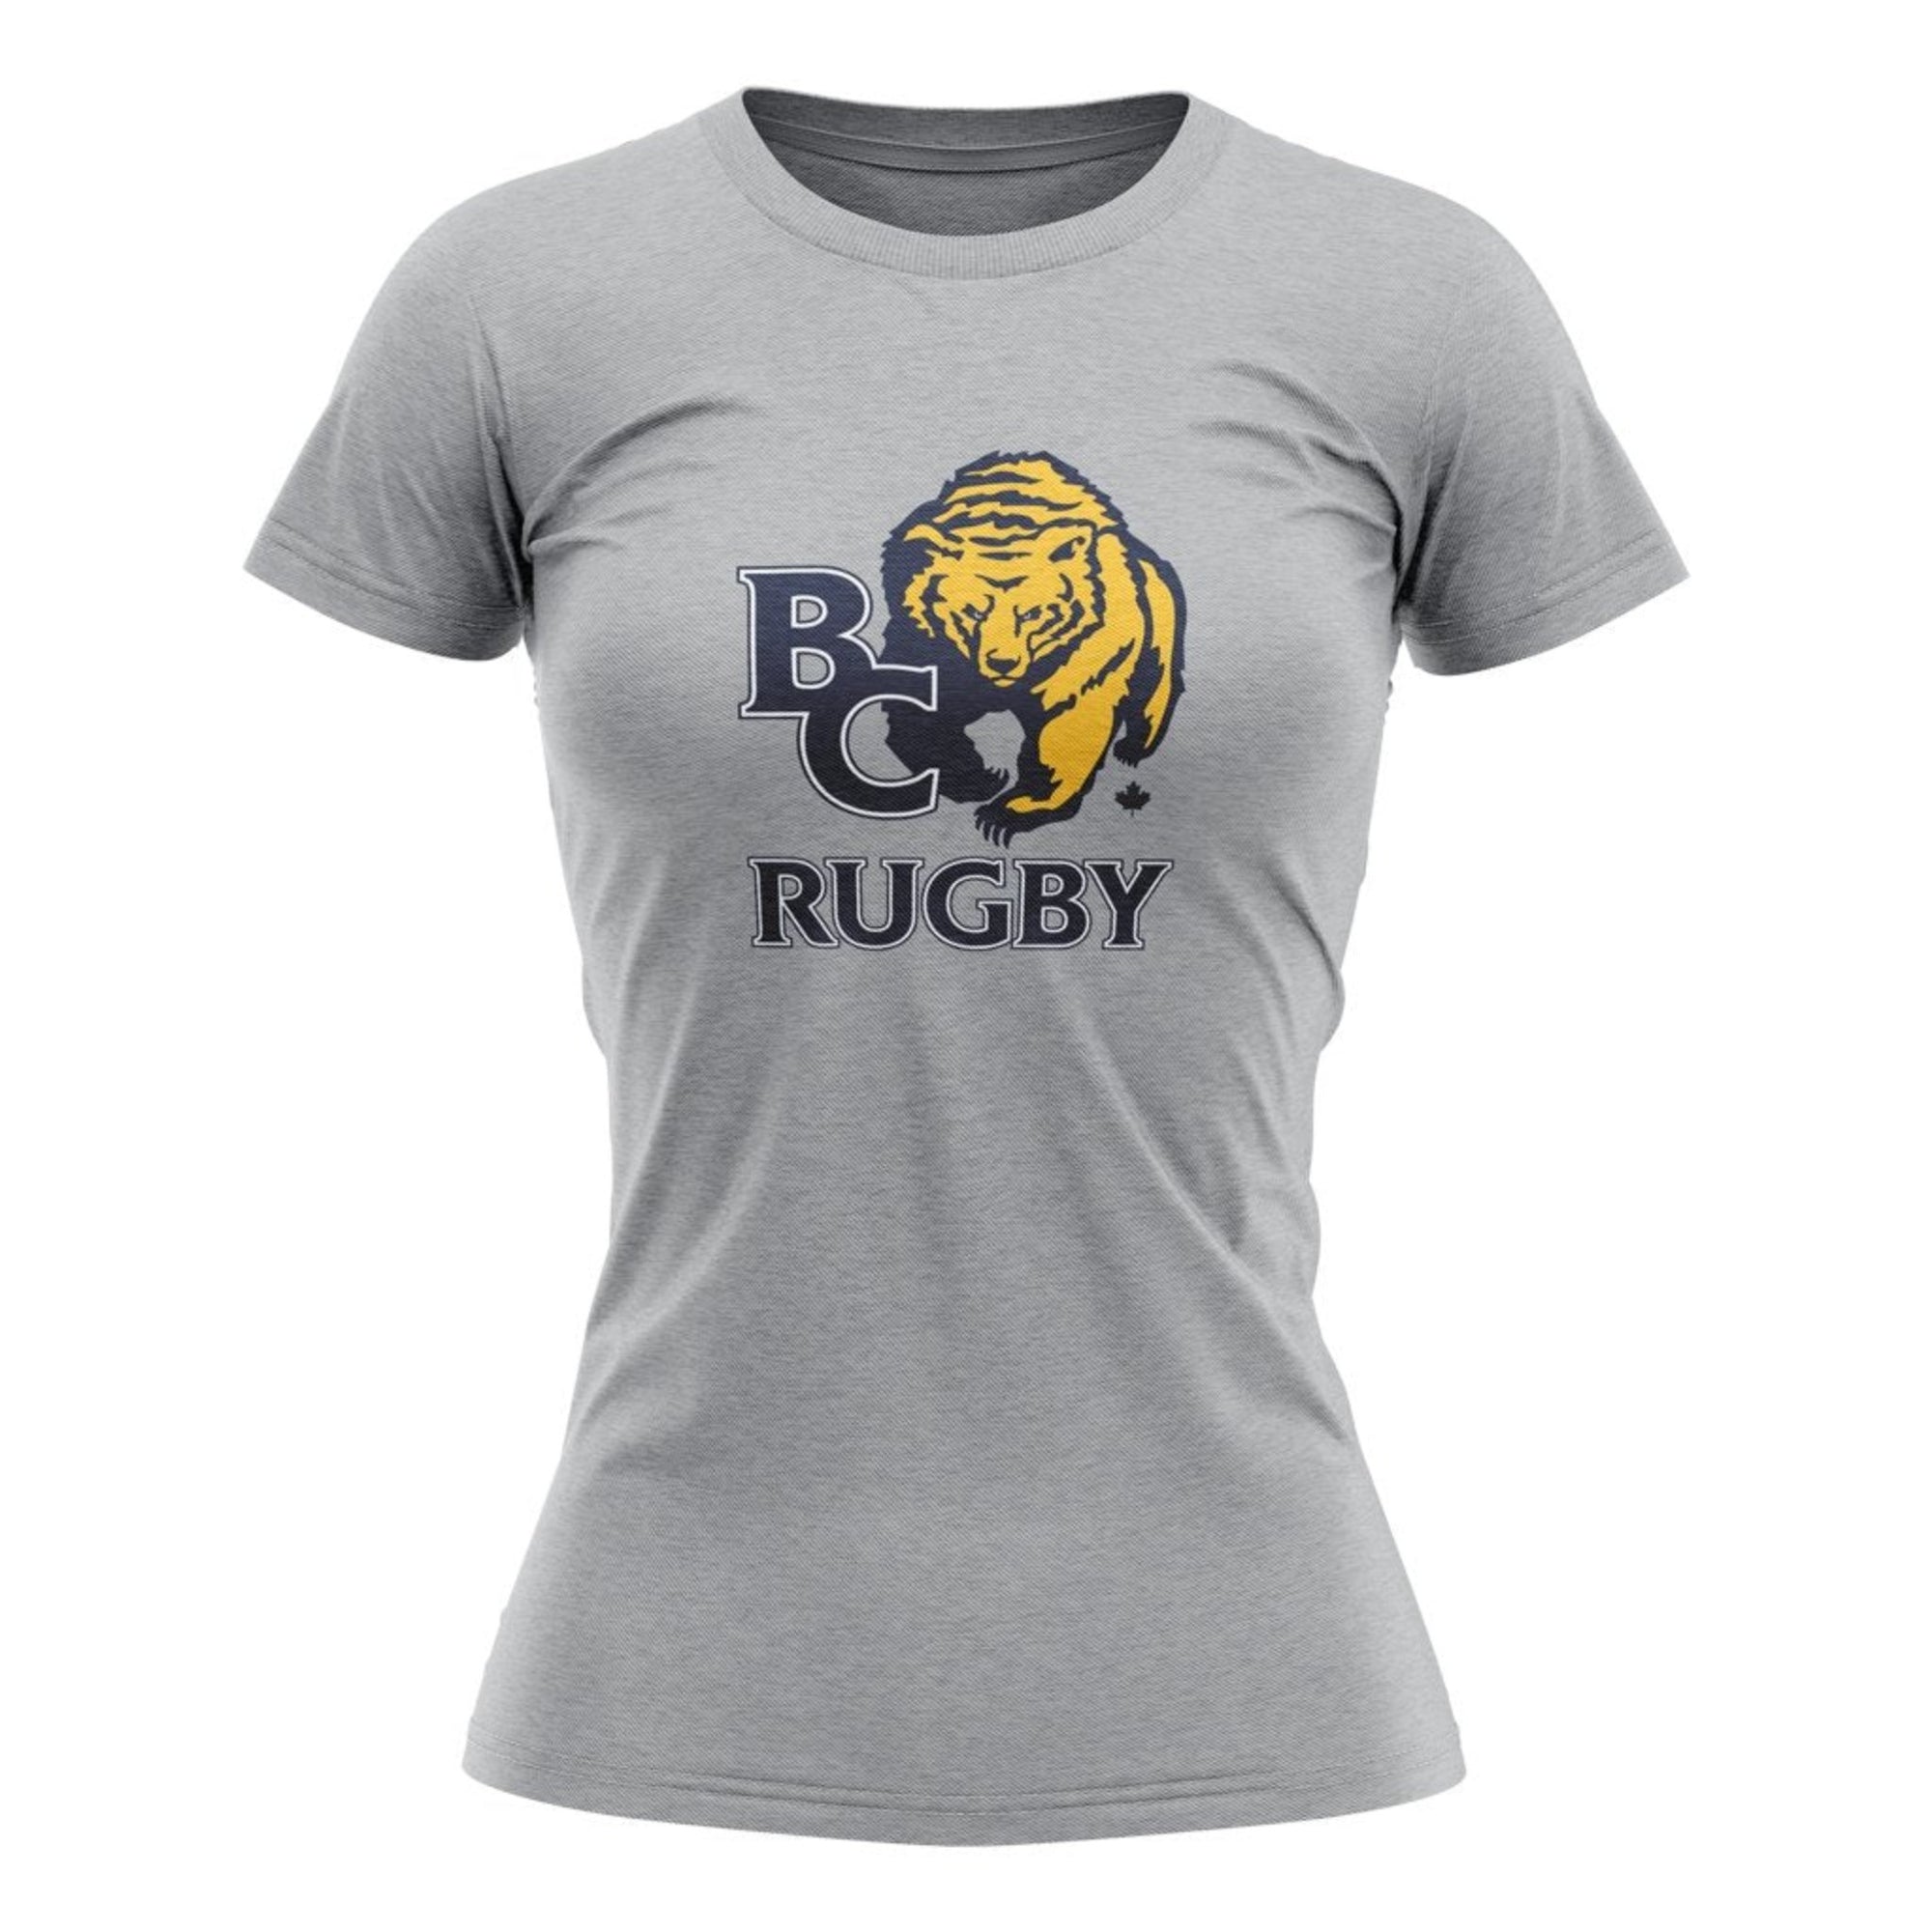 BC Rugby 2021 "Team" Tee - Women's Navy/Grey/White/Gold - www.therugbyshop.com www.therugbyshop.com WOMENS / WHITE / XS XIX Brands TEES BC Rugby 2021 "Team" Tee - Women's Navy/Grey/White/Gold